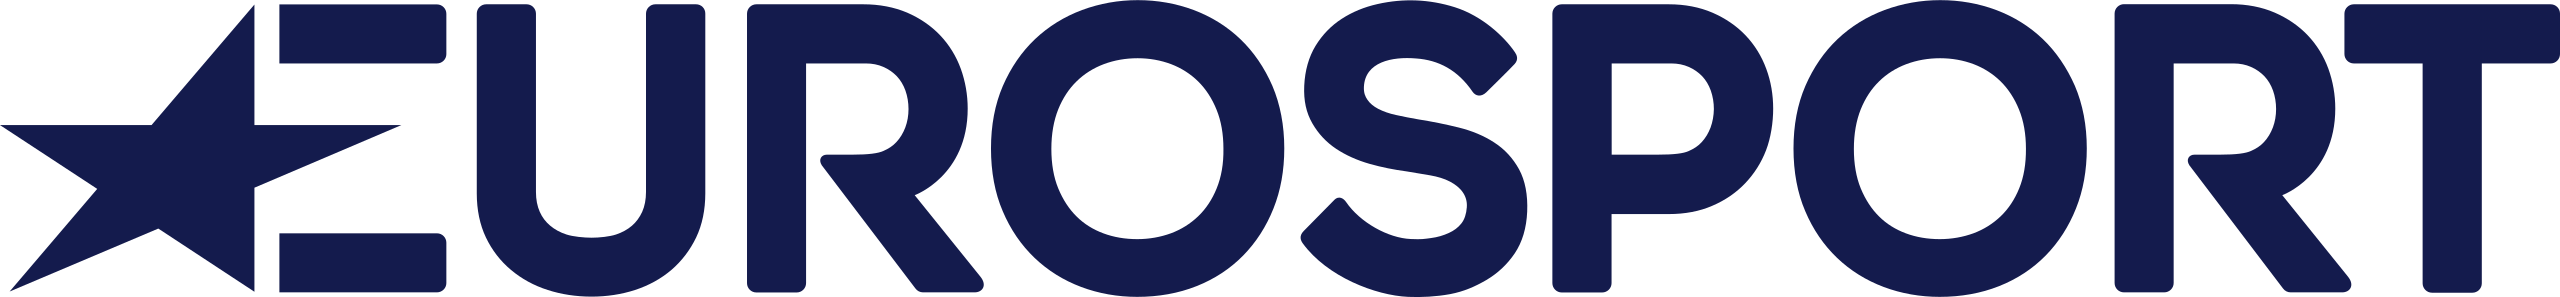 Eurosport Logo 2015.svg